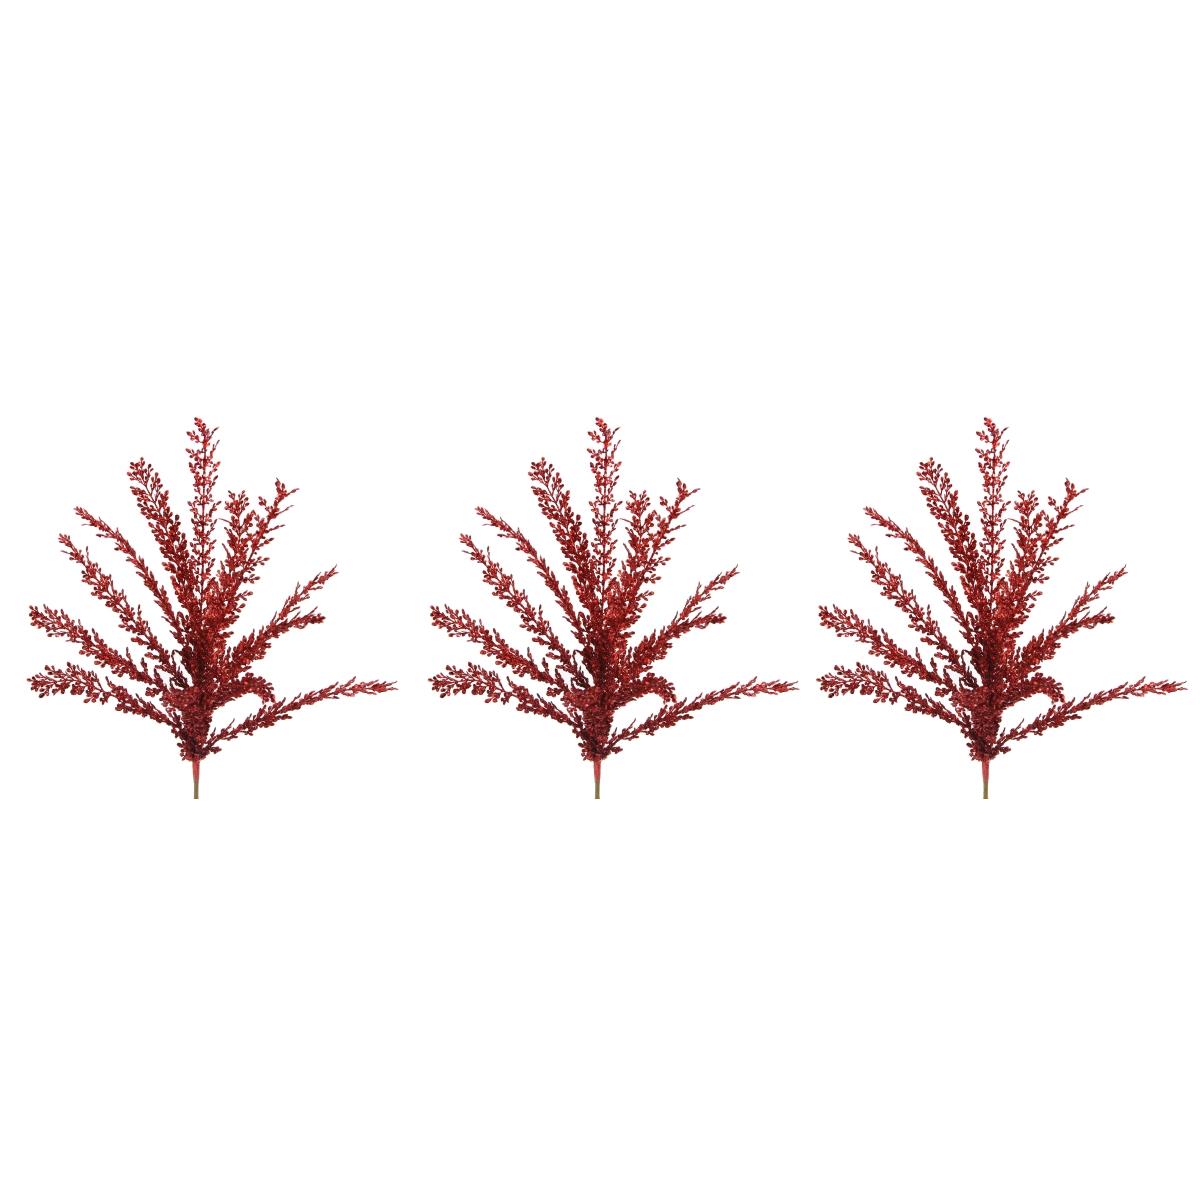 23 In. Glitter Filigree Leaf Spray Christmas Decor, Red - Set Of 3